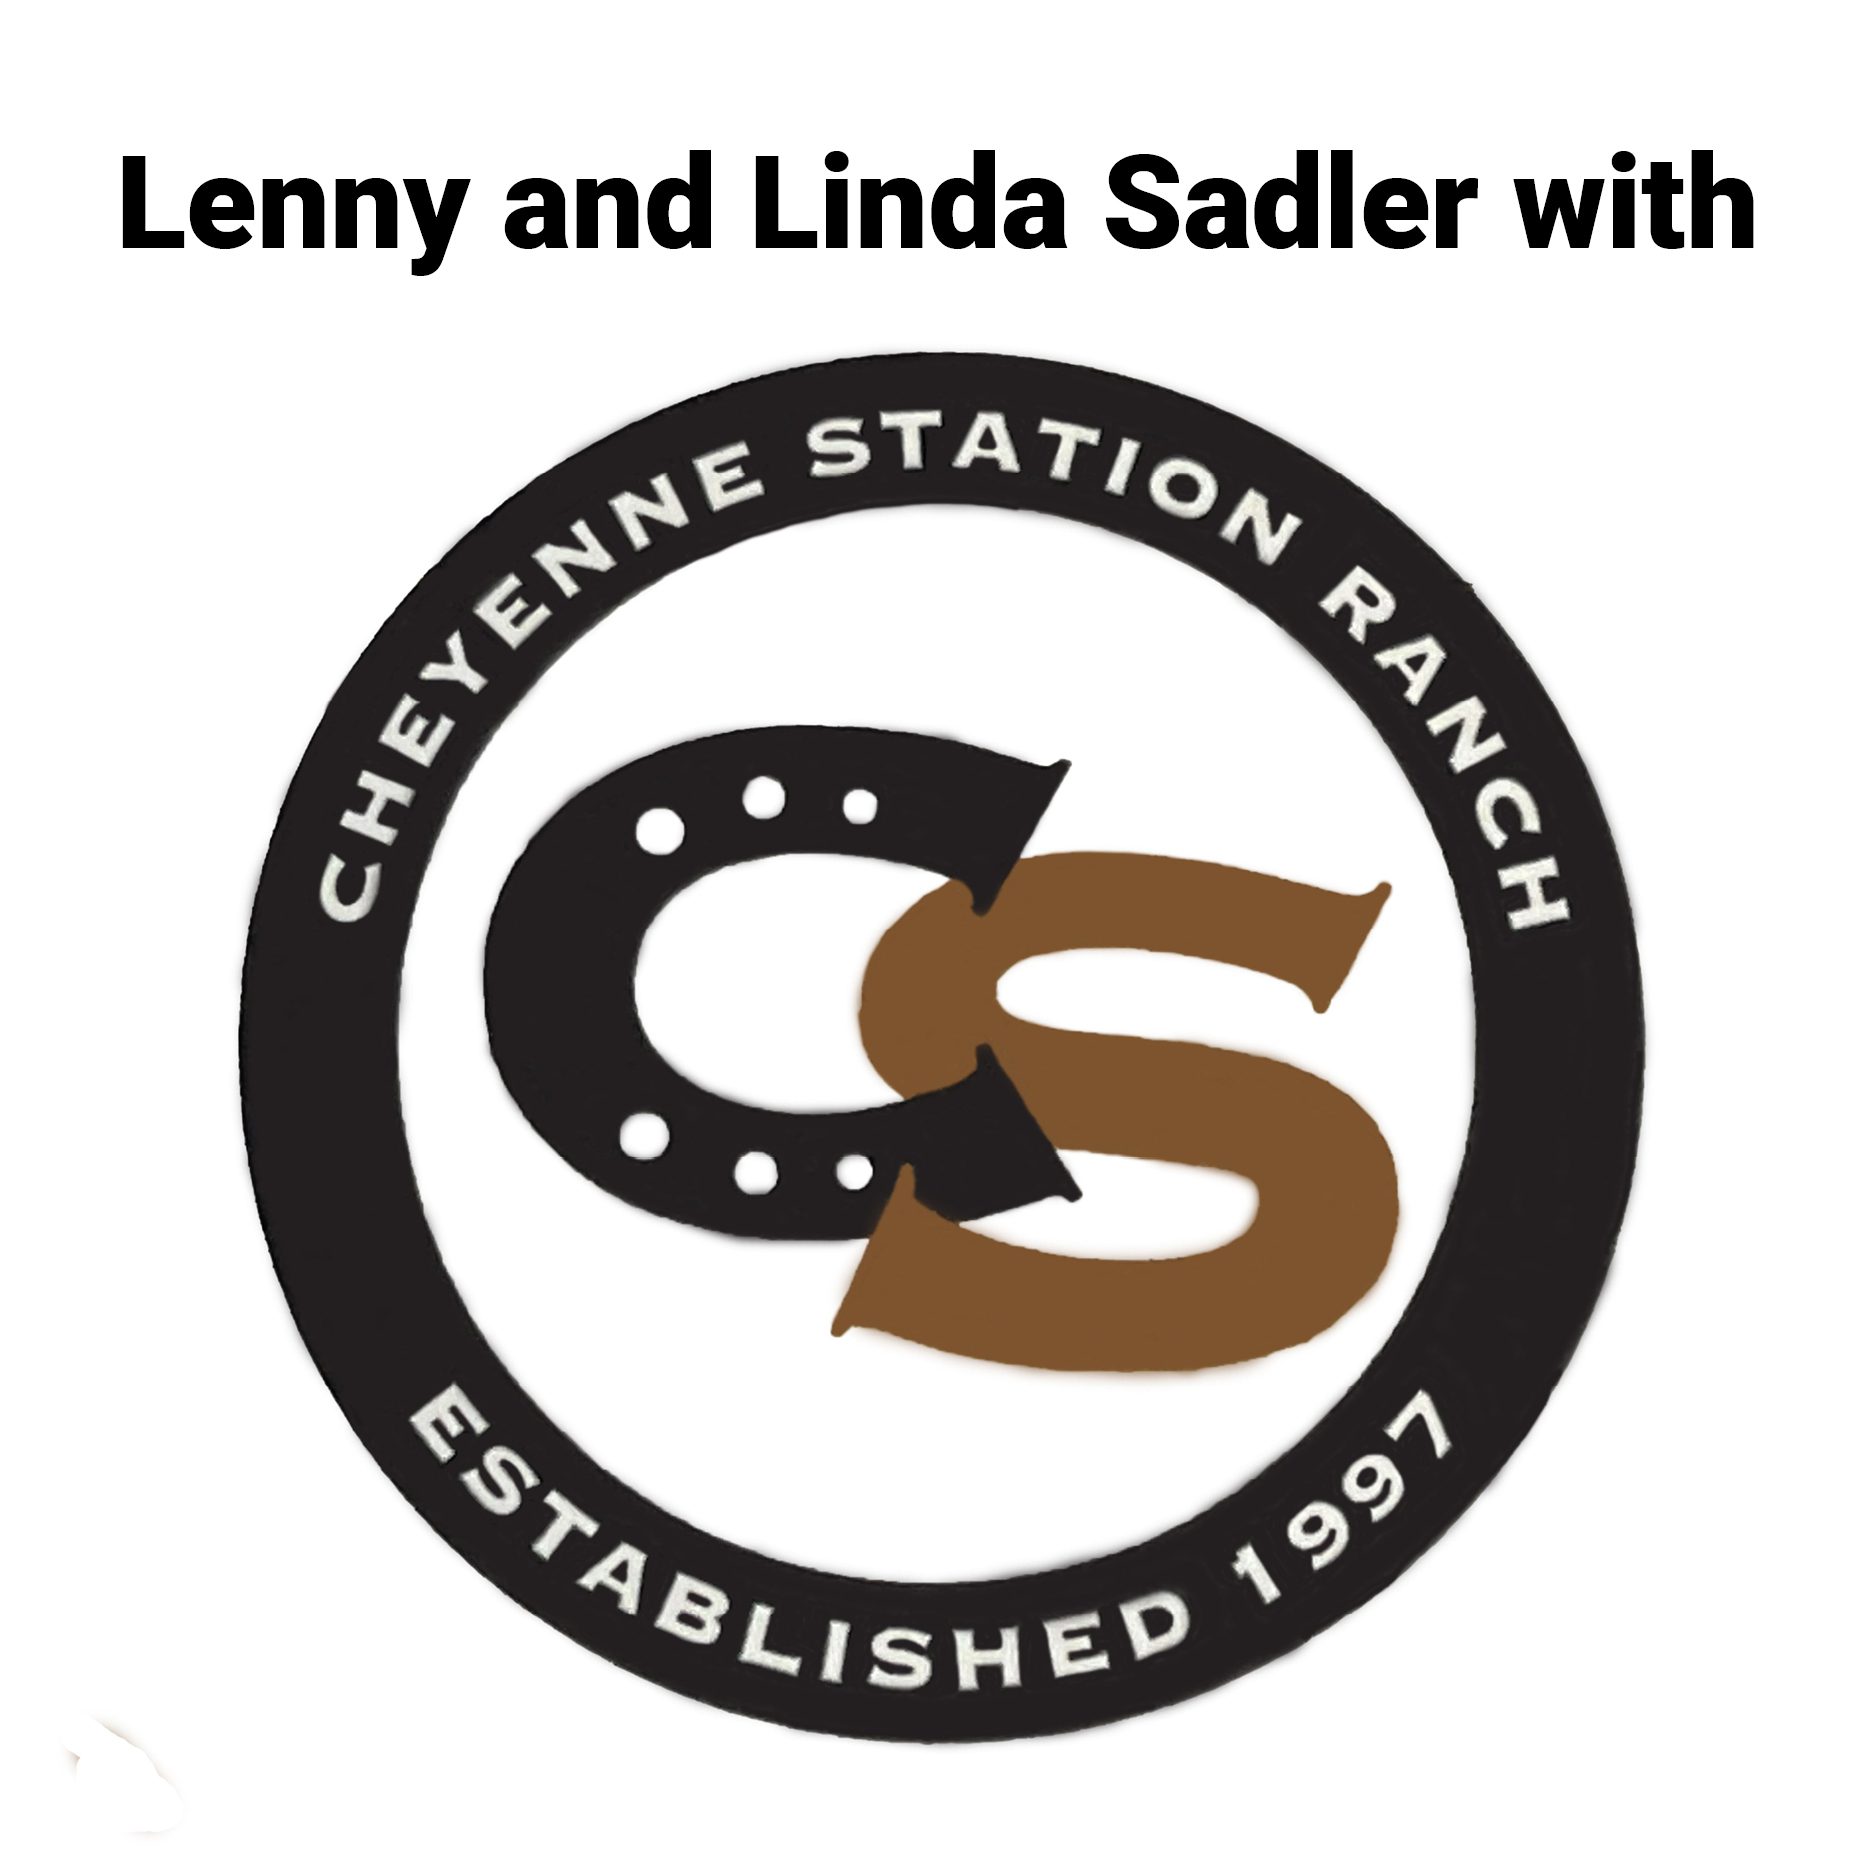 Lenny and Linda Sadler with Cheyenne Station Ranch